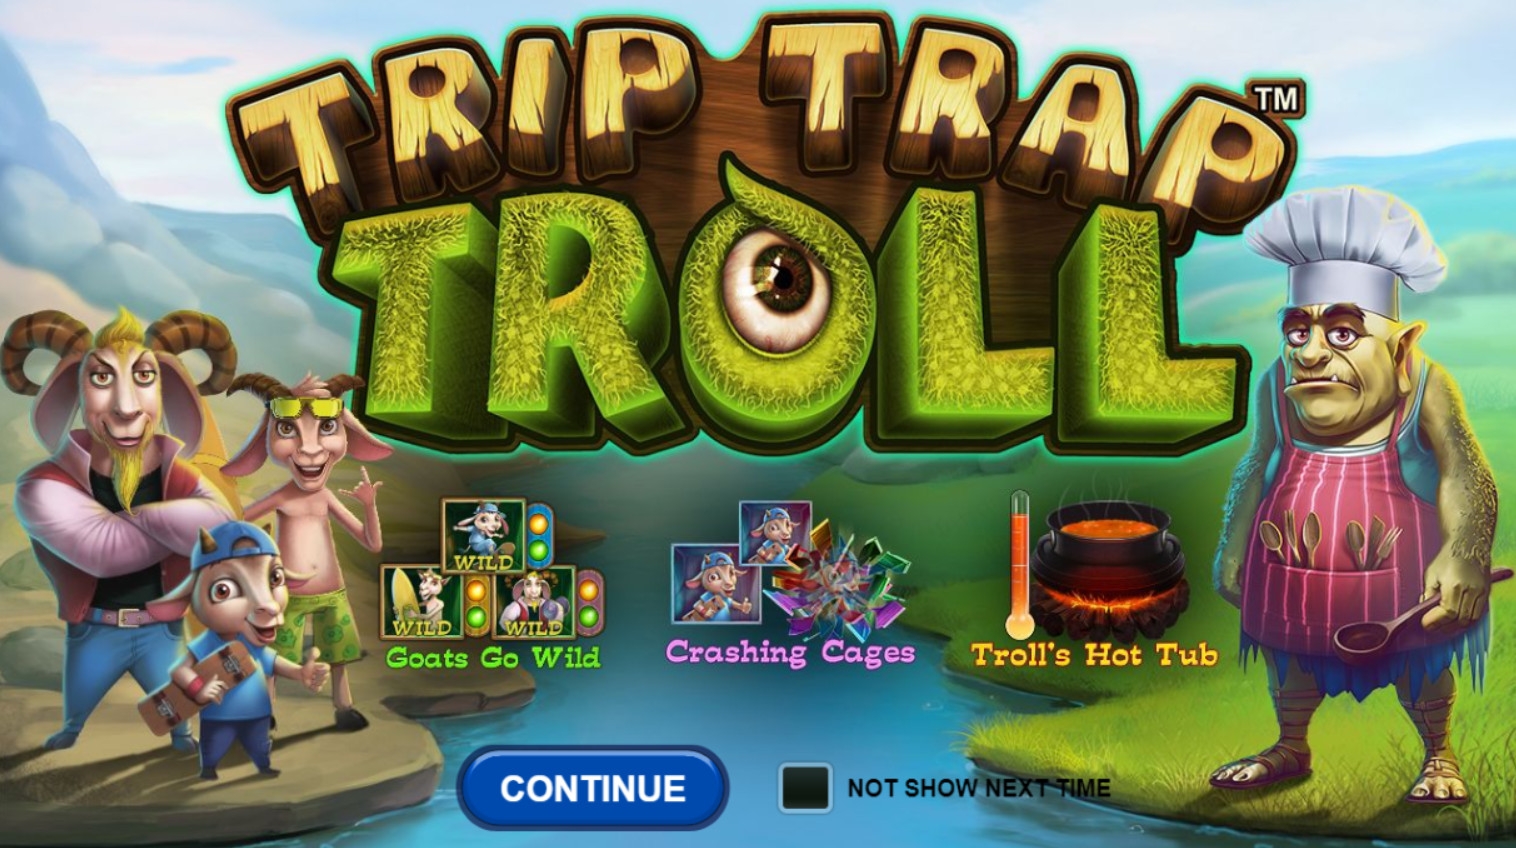 Trip Trap Troll video slot